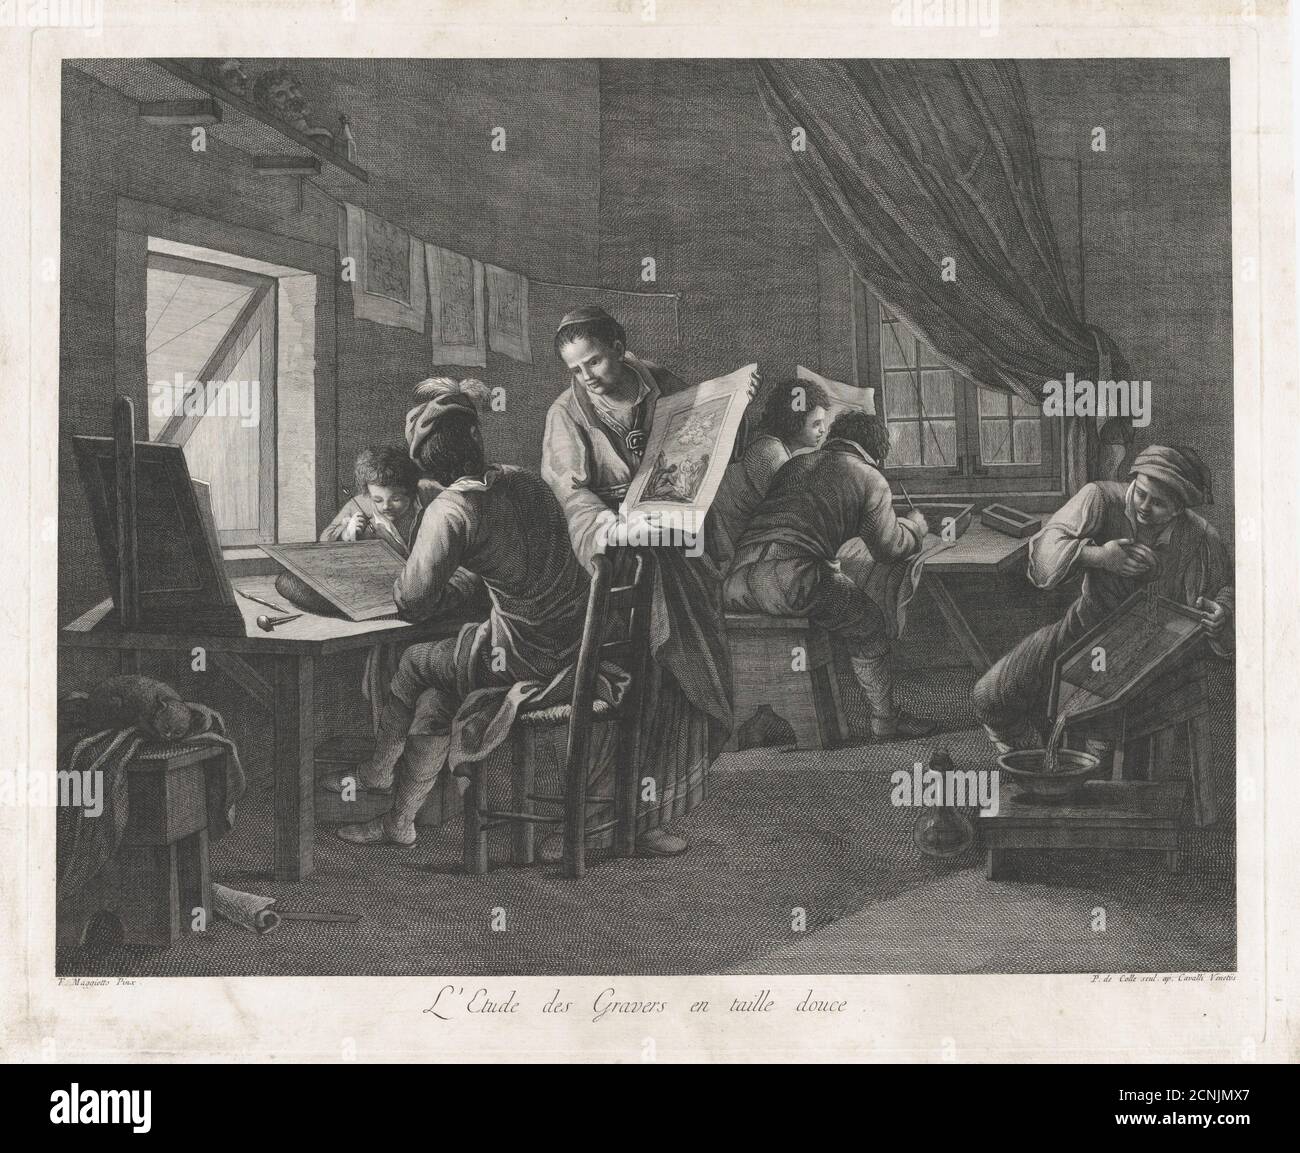 The Printmaking Workshop, 1750-1800. Stock Photo